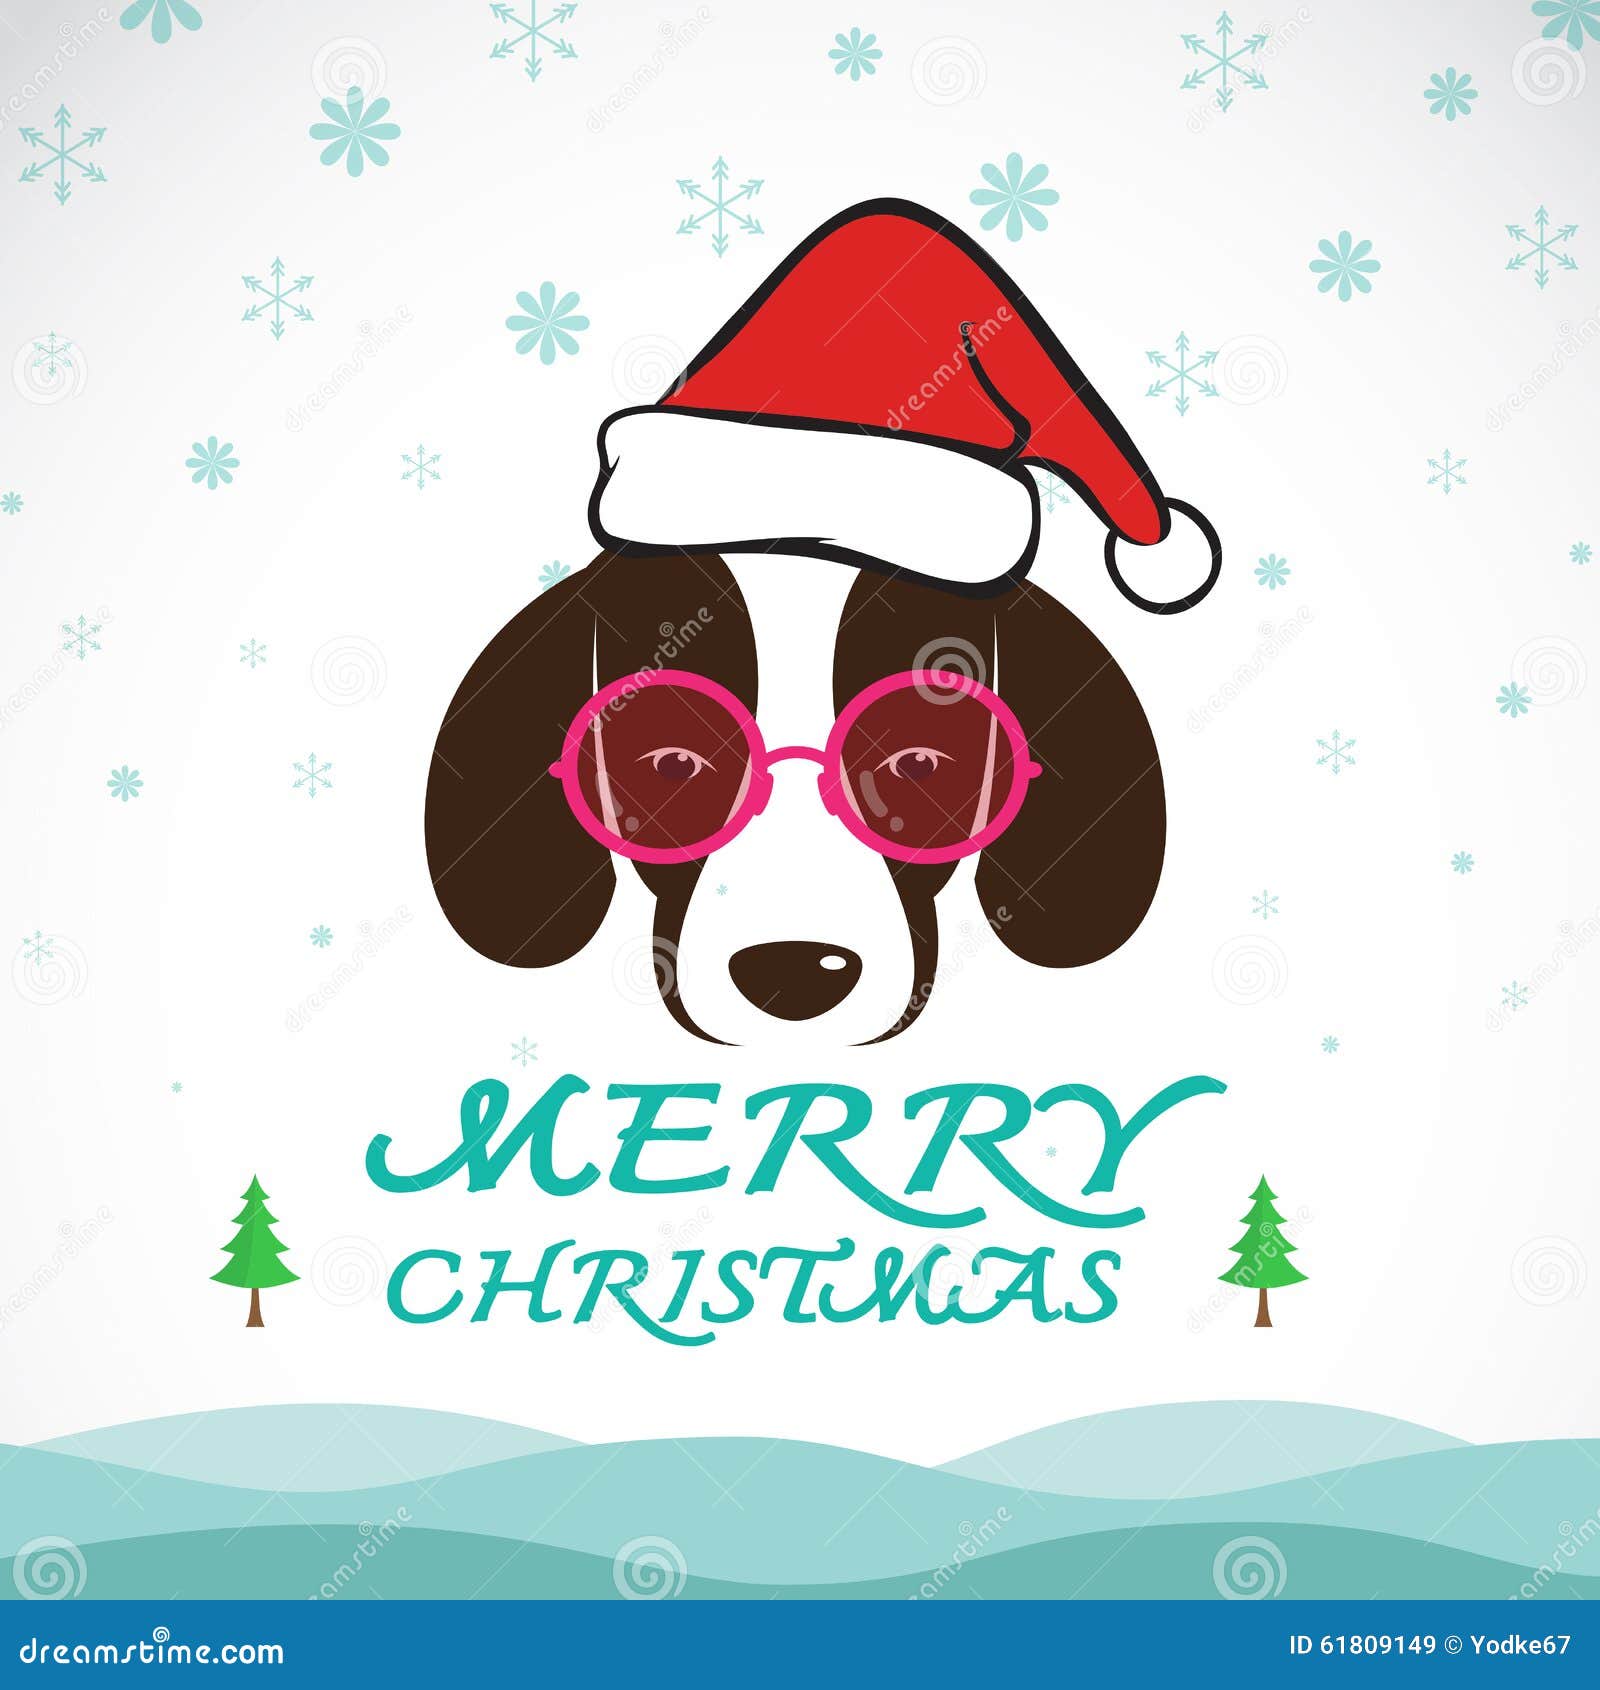 merry christmas dog clipart - photo #28